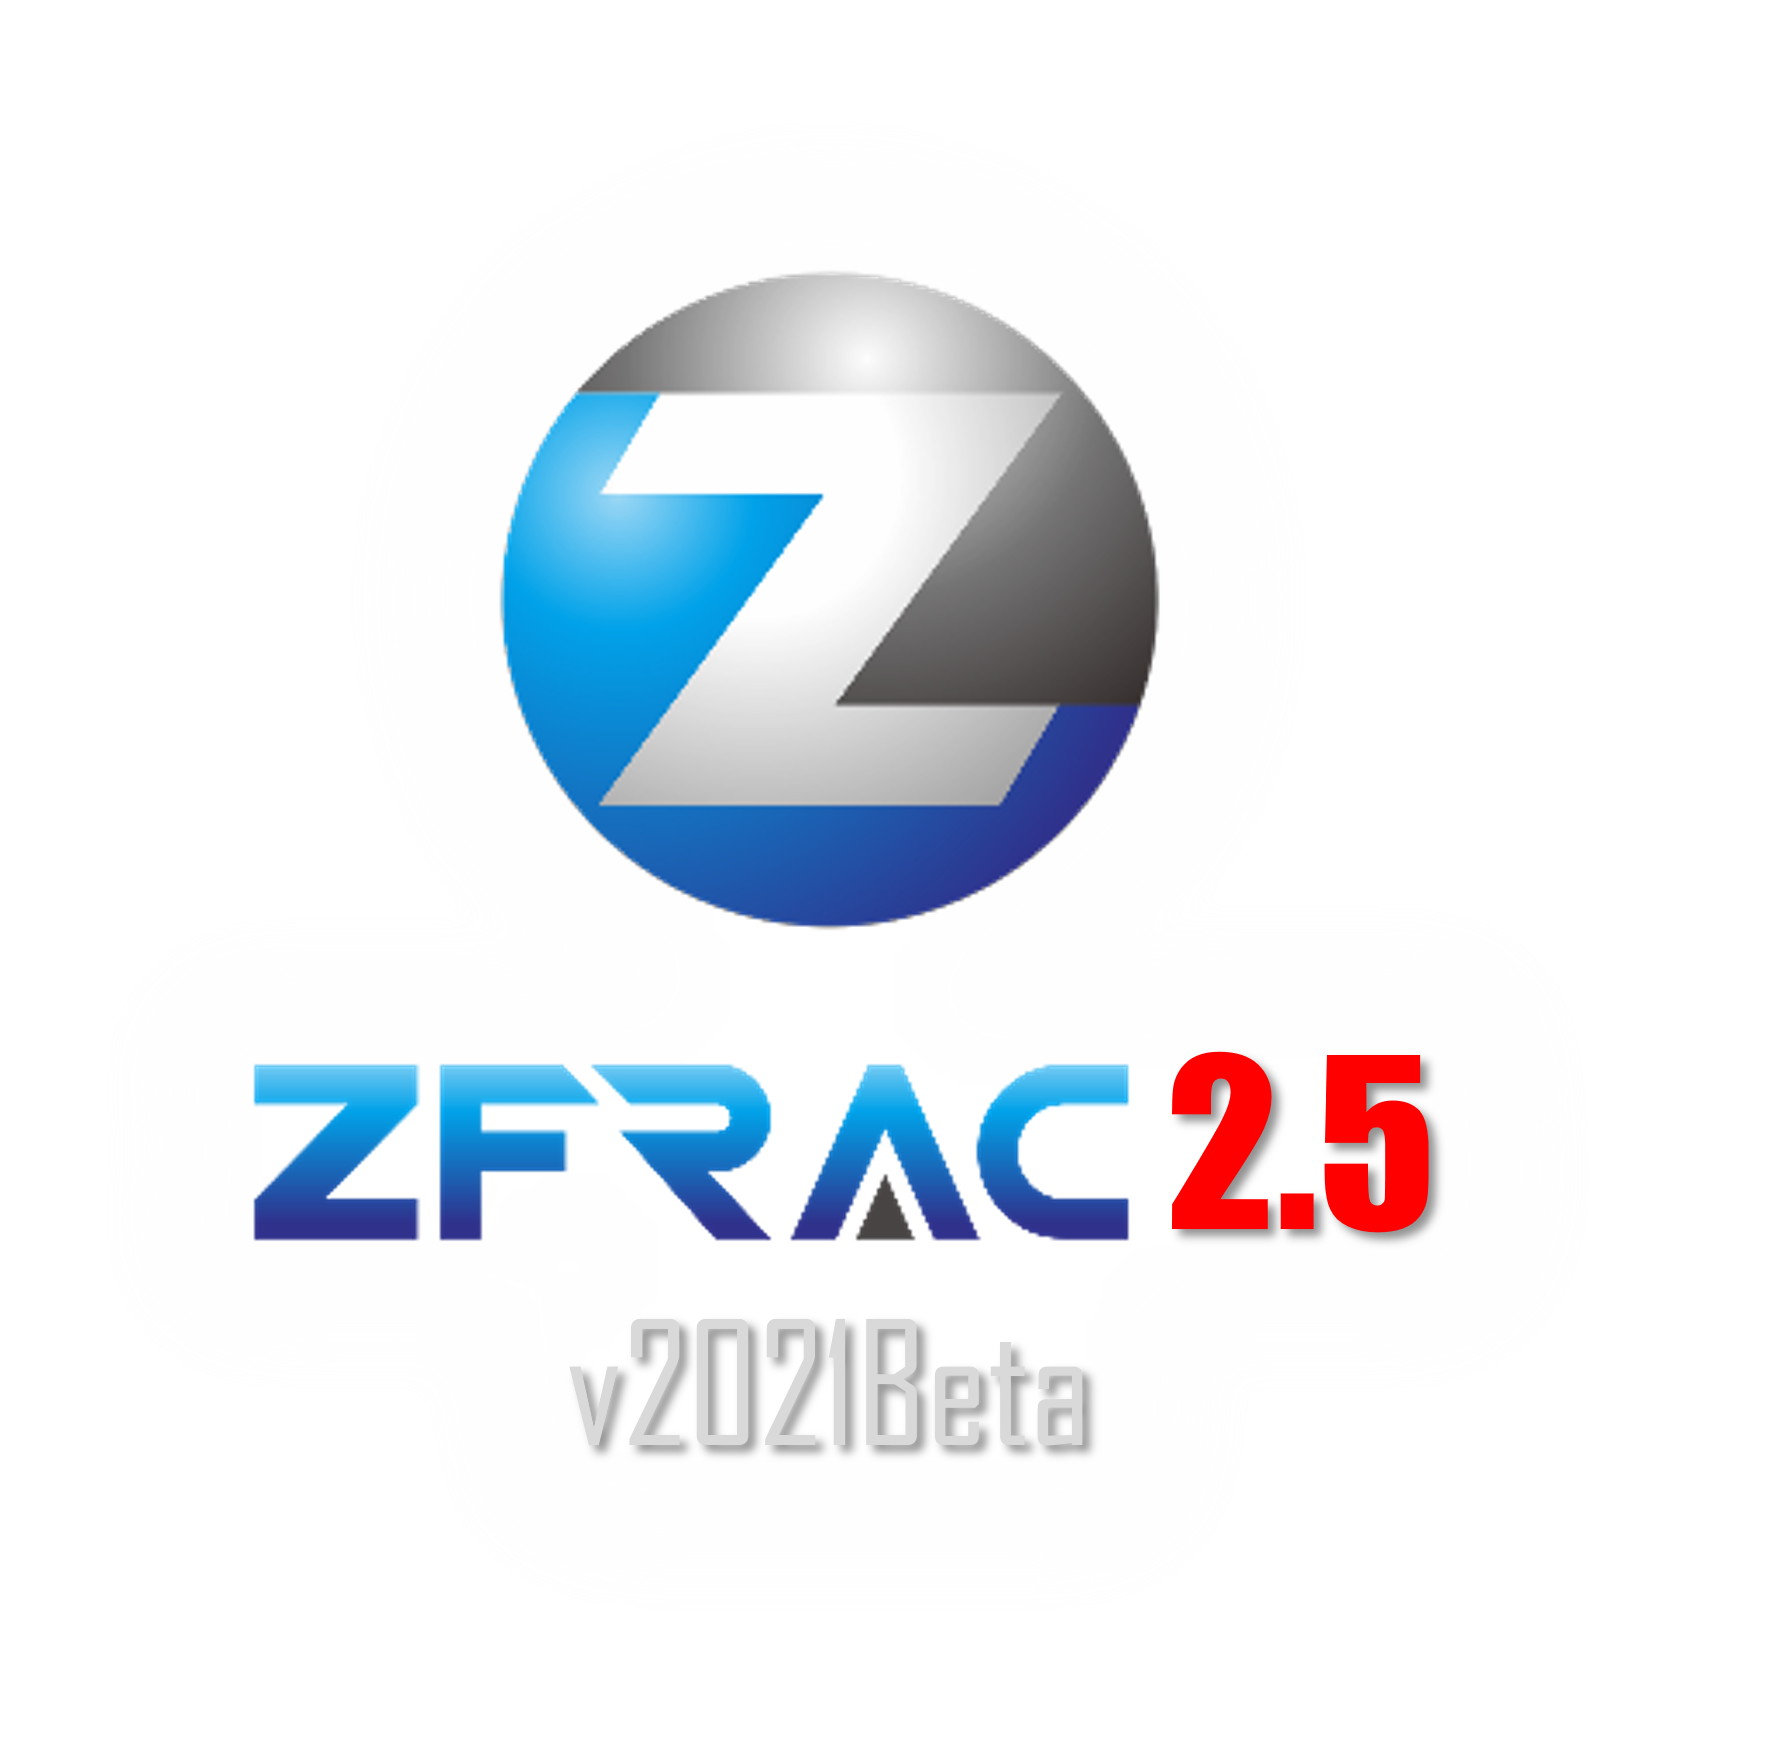 zfrac2.png